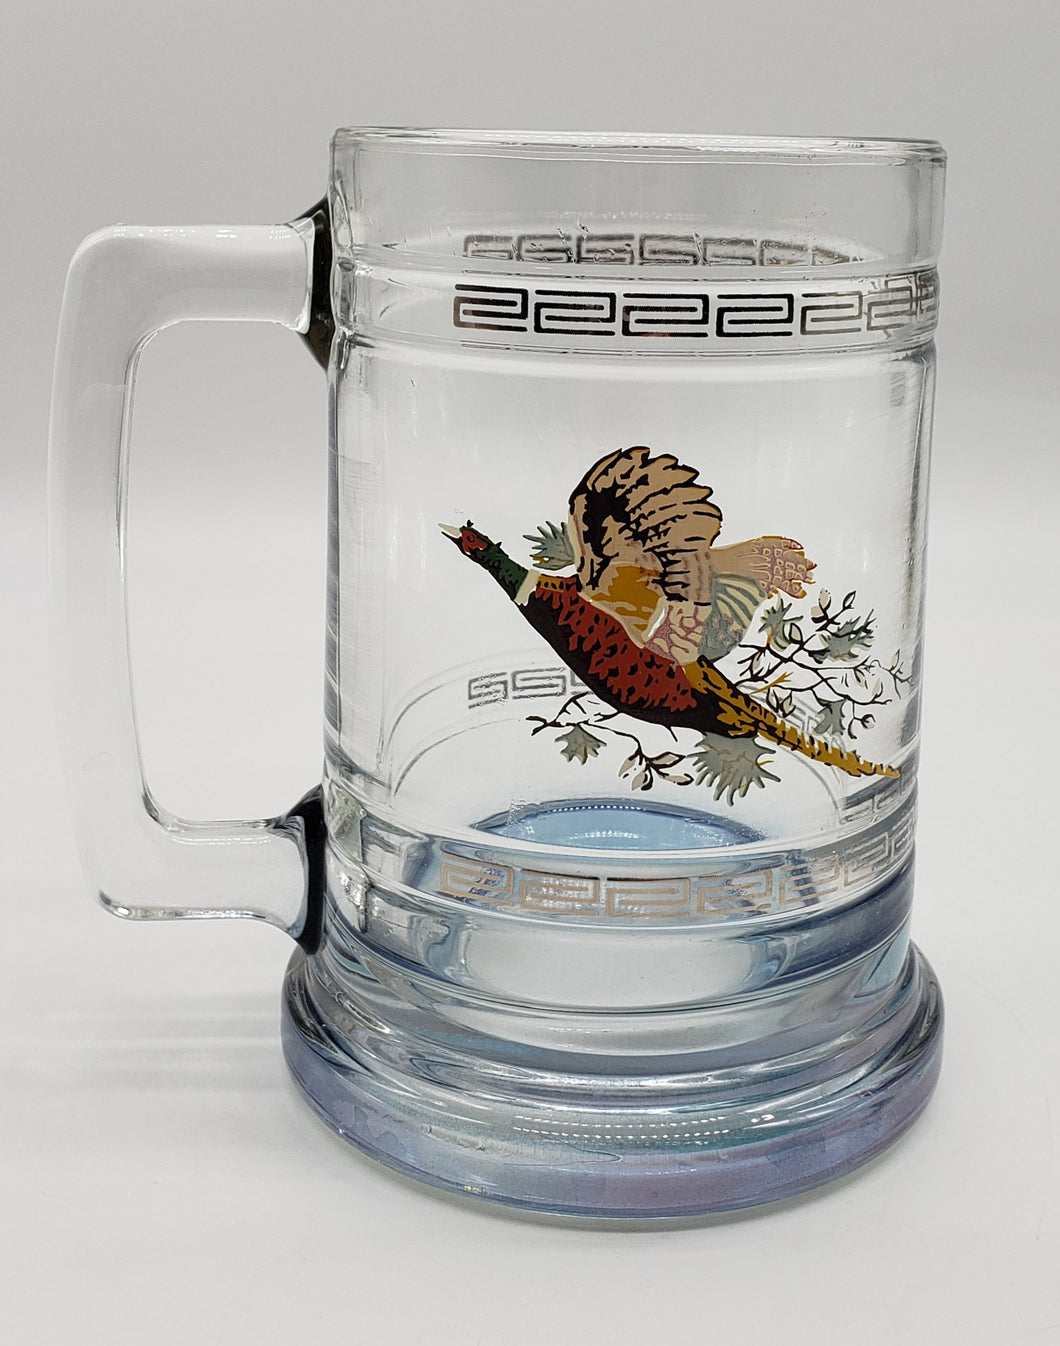 Flying Grouse Pheasant Glass Tankard Beer Stein